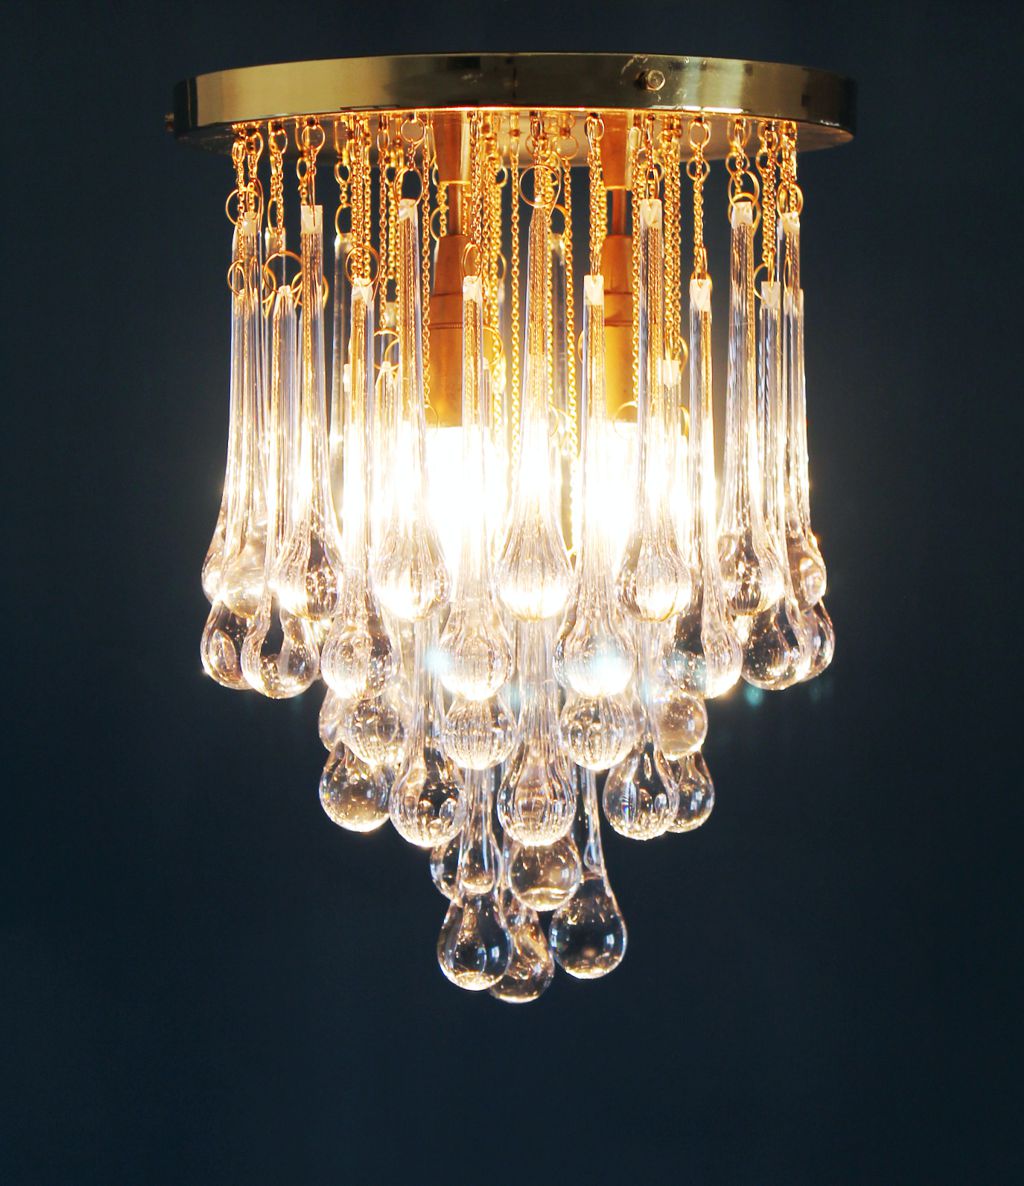 http://elnidosingular.com/wp-content/uploads/2016/06/kalmar-palme-glass-drops-flush-mount-lamp-chandelier-lampara-vintage-lagrimas-cristal-06.jpg